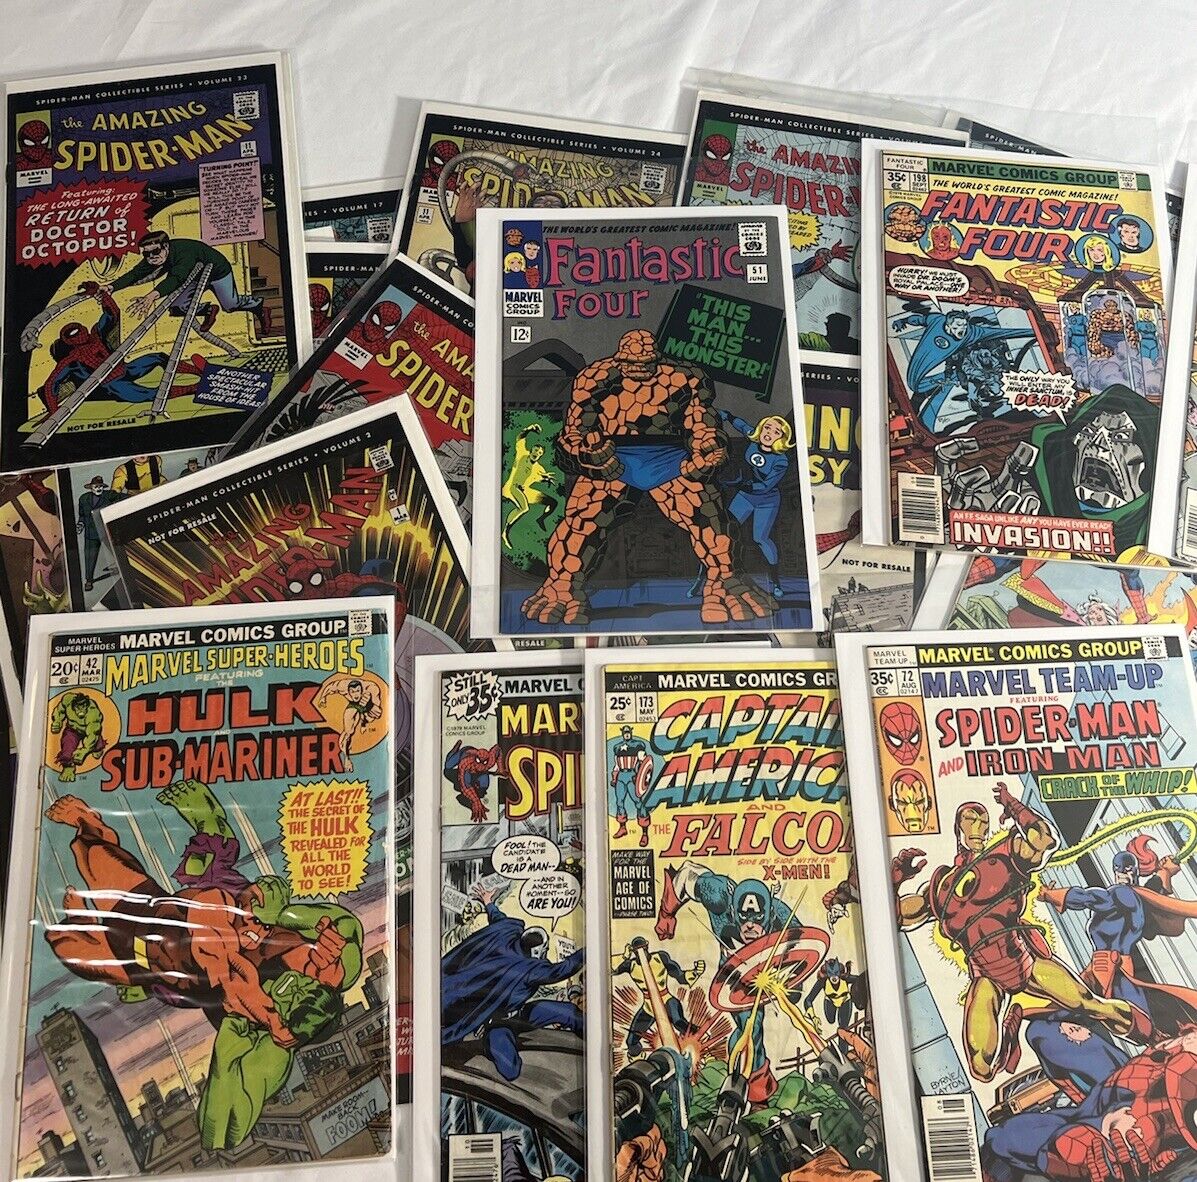 Huge Vintage lot of Marvel All Ages Amazing Spiderman comics Amazing Fantasy